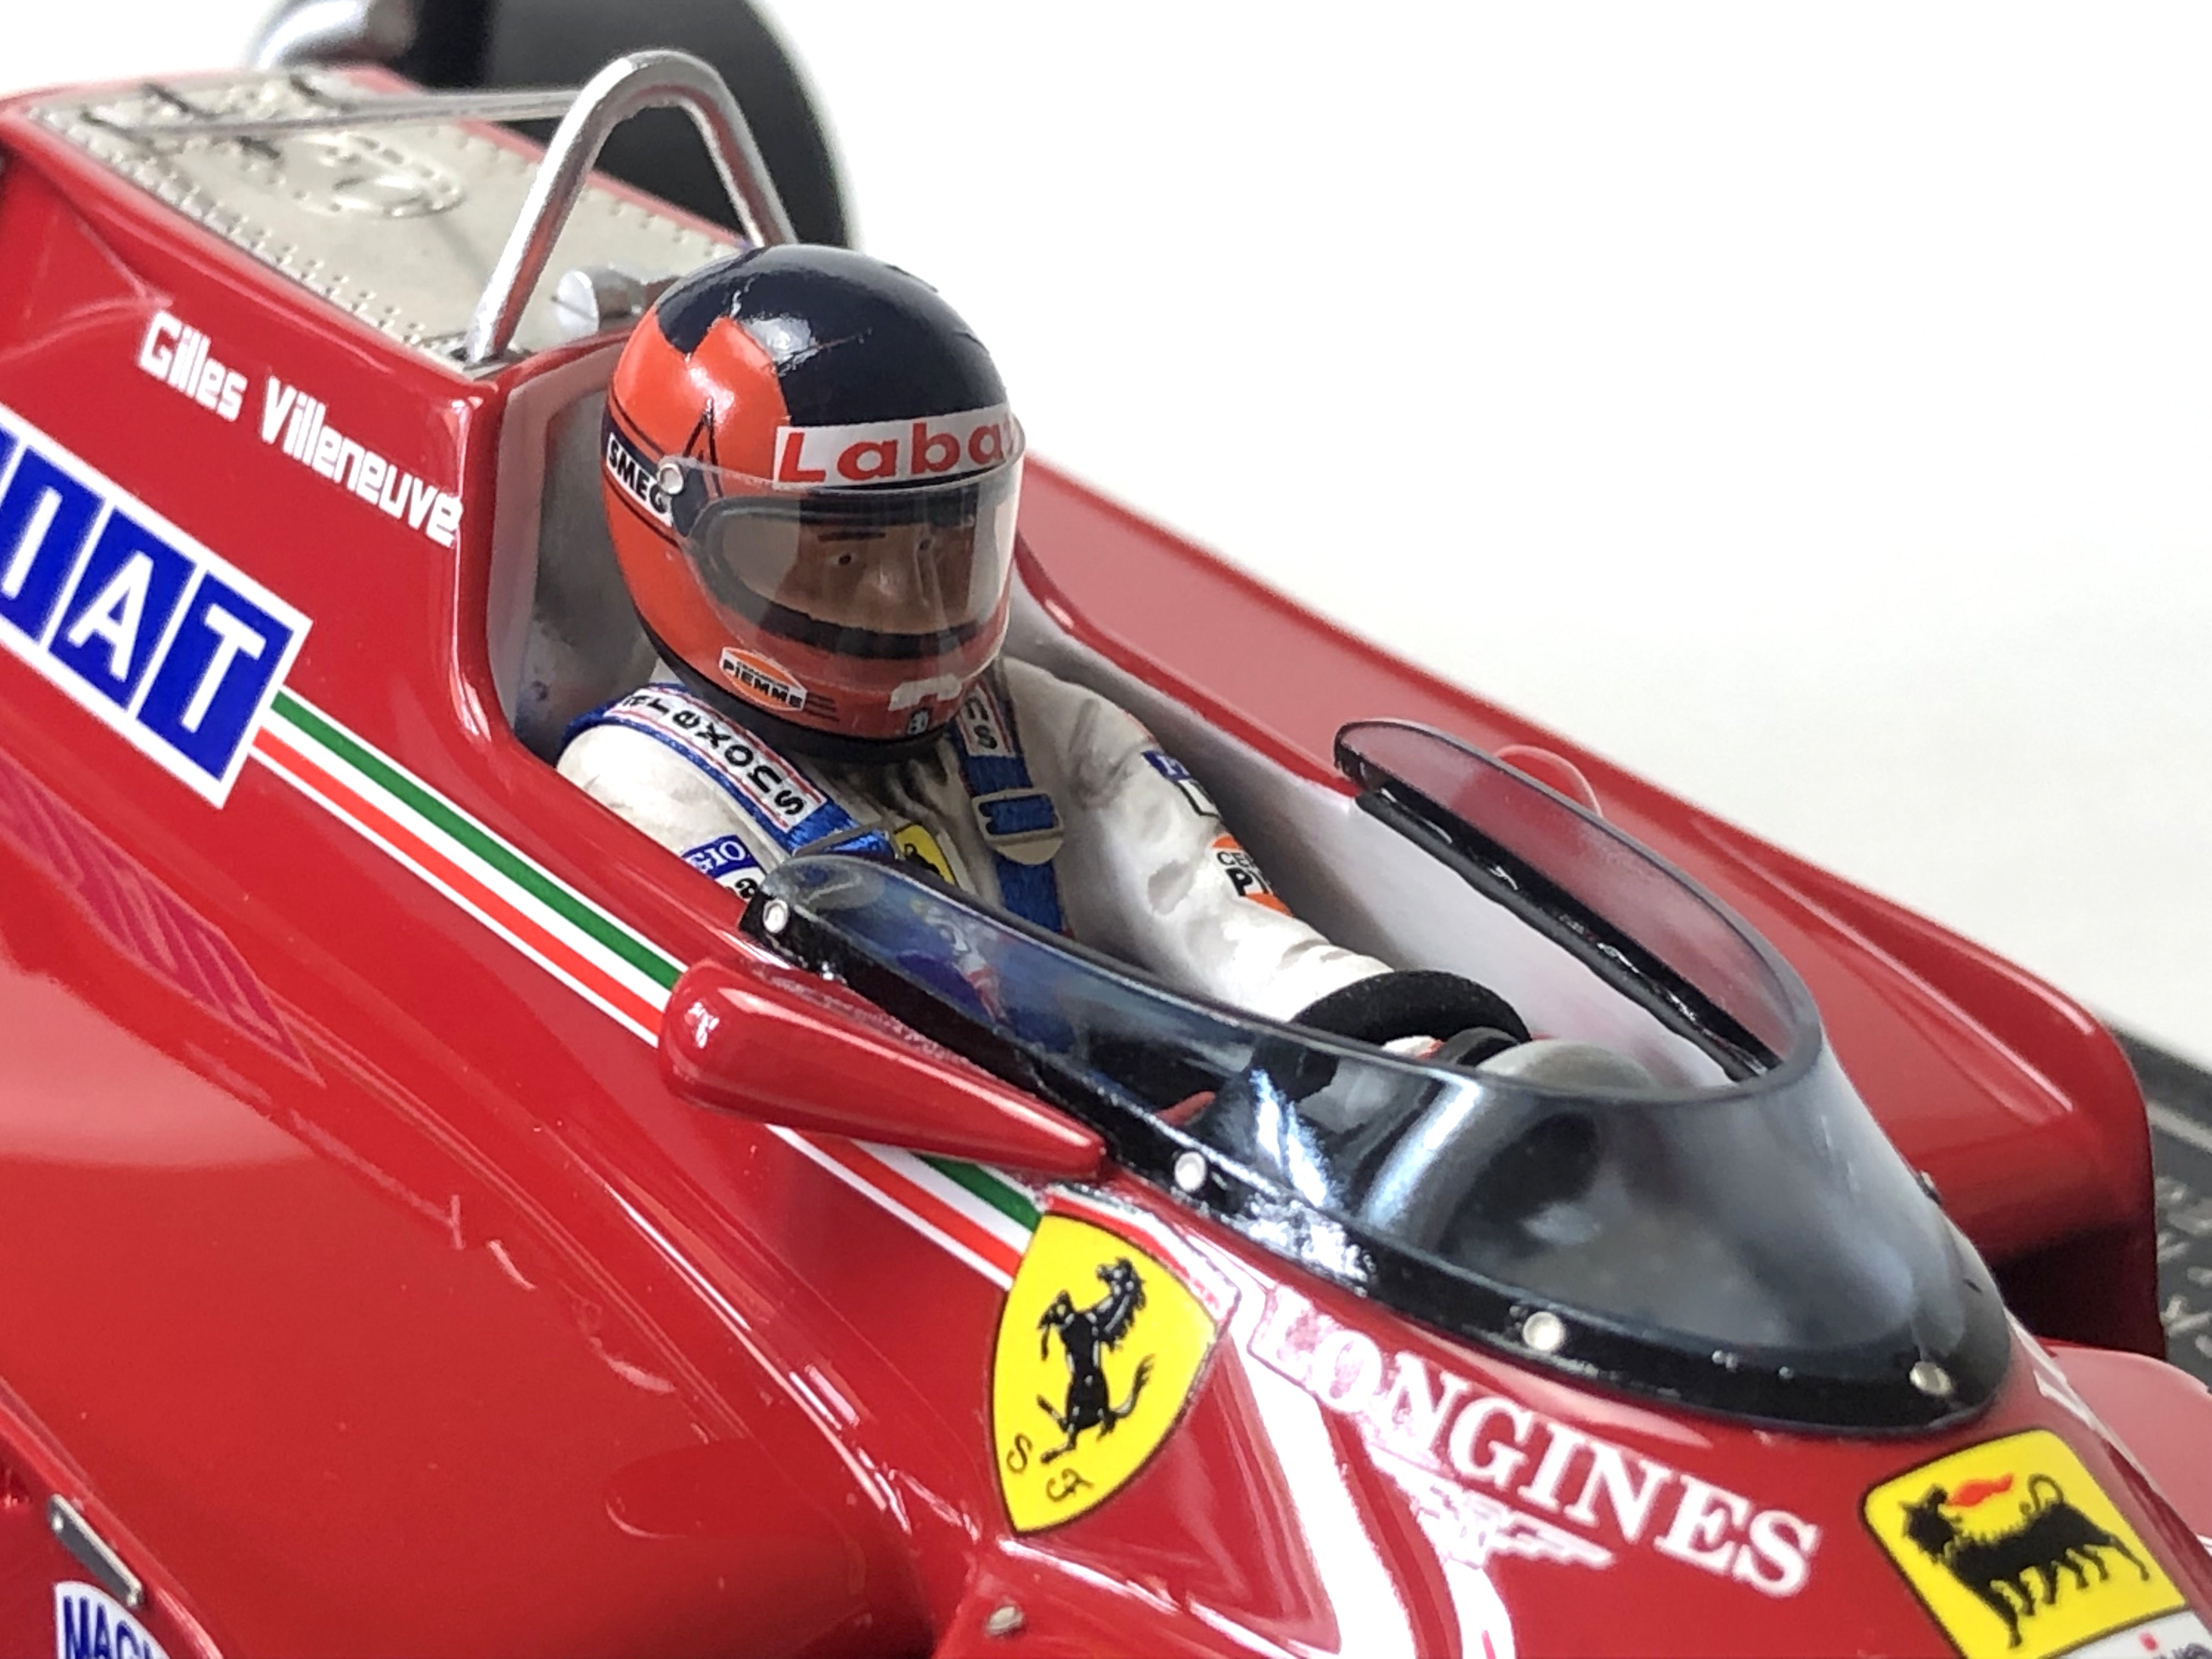 Ferrari 126CK #27 Gilles Villeneurve 1:18 scale 1981 Monaco Grand Prix Winner